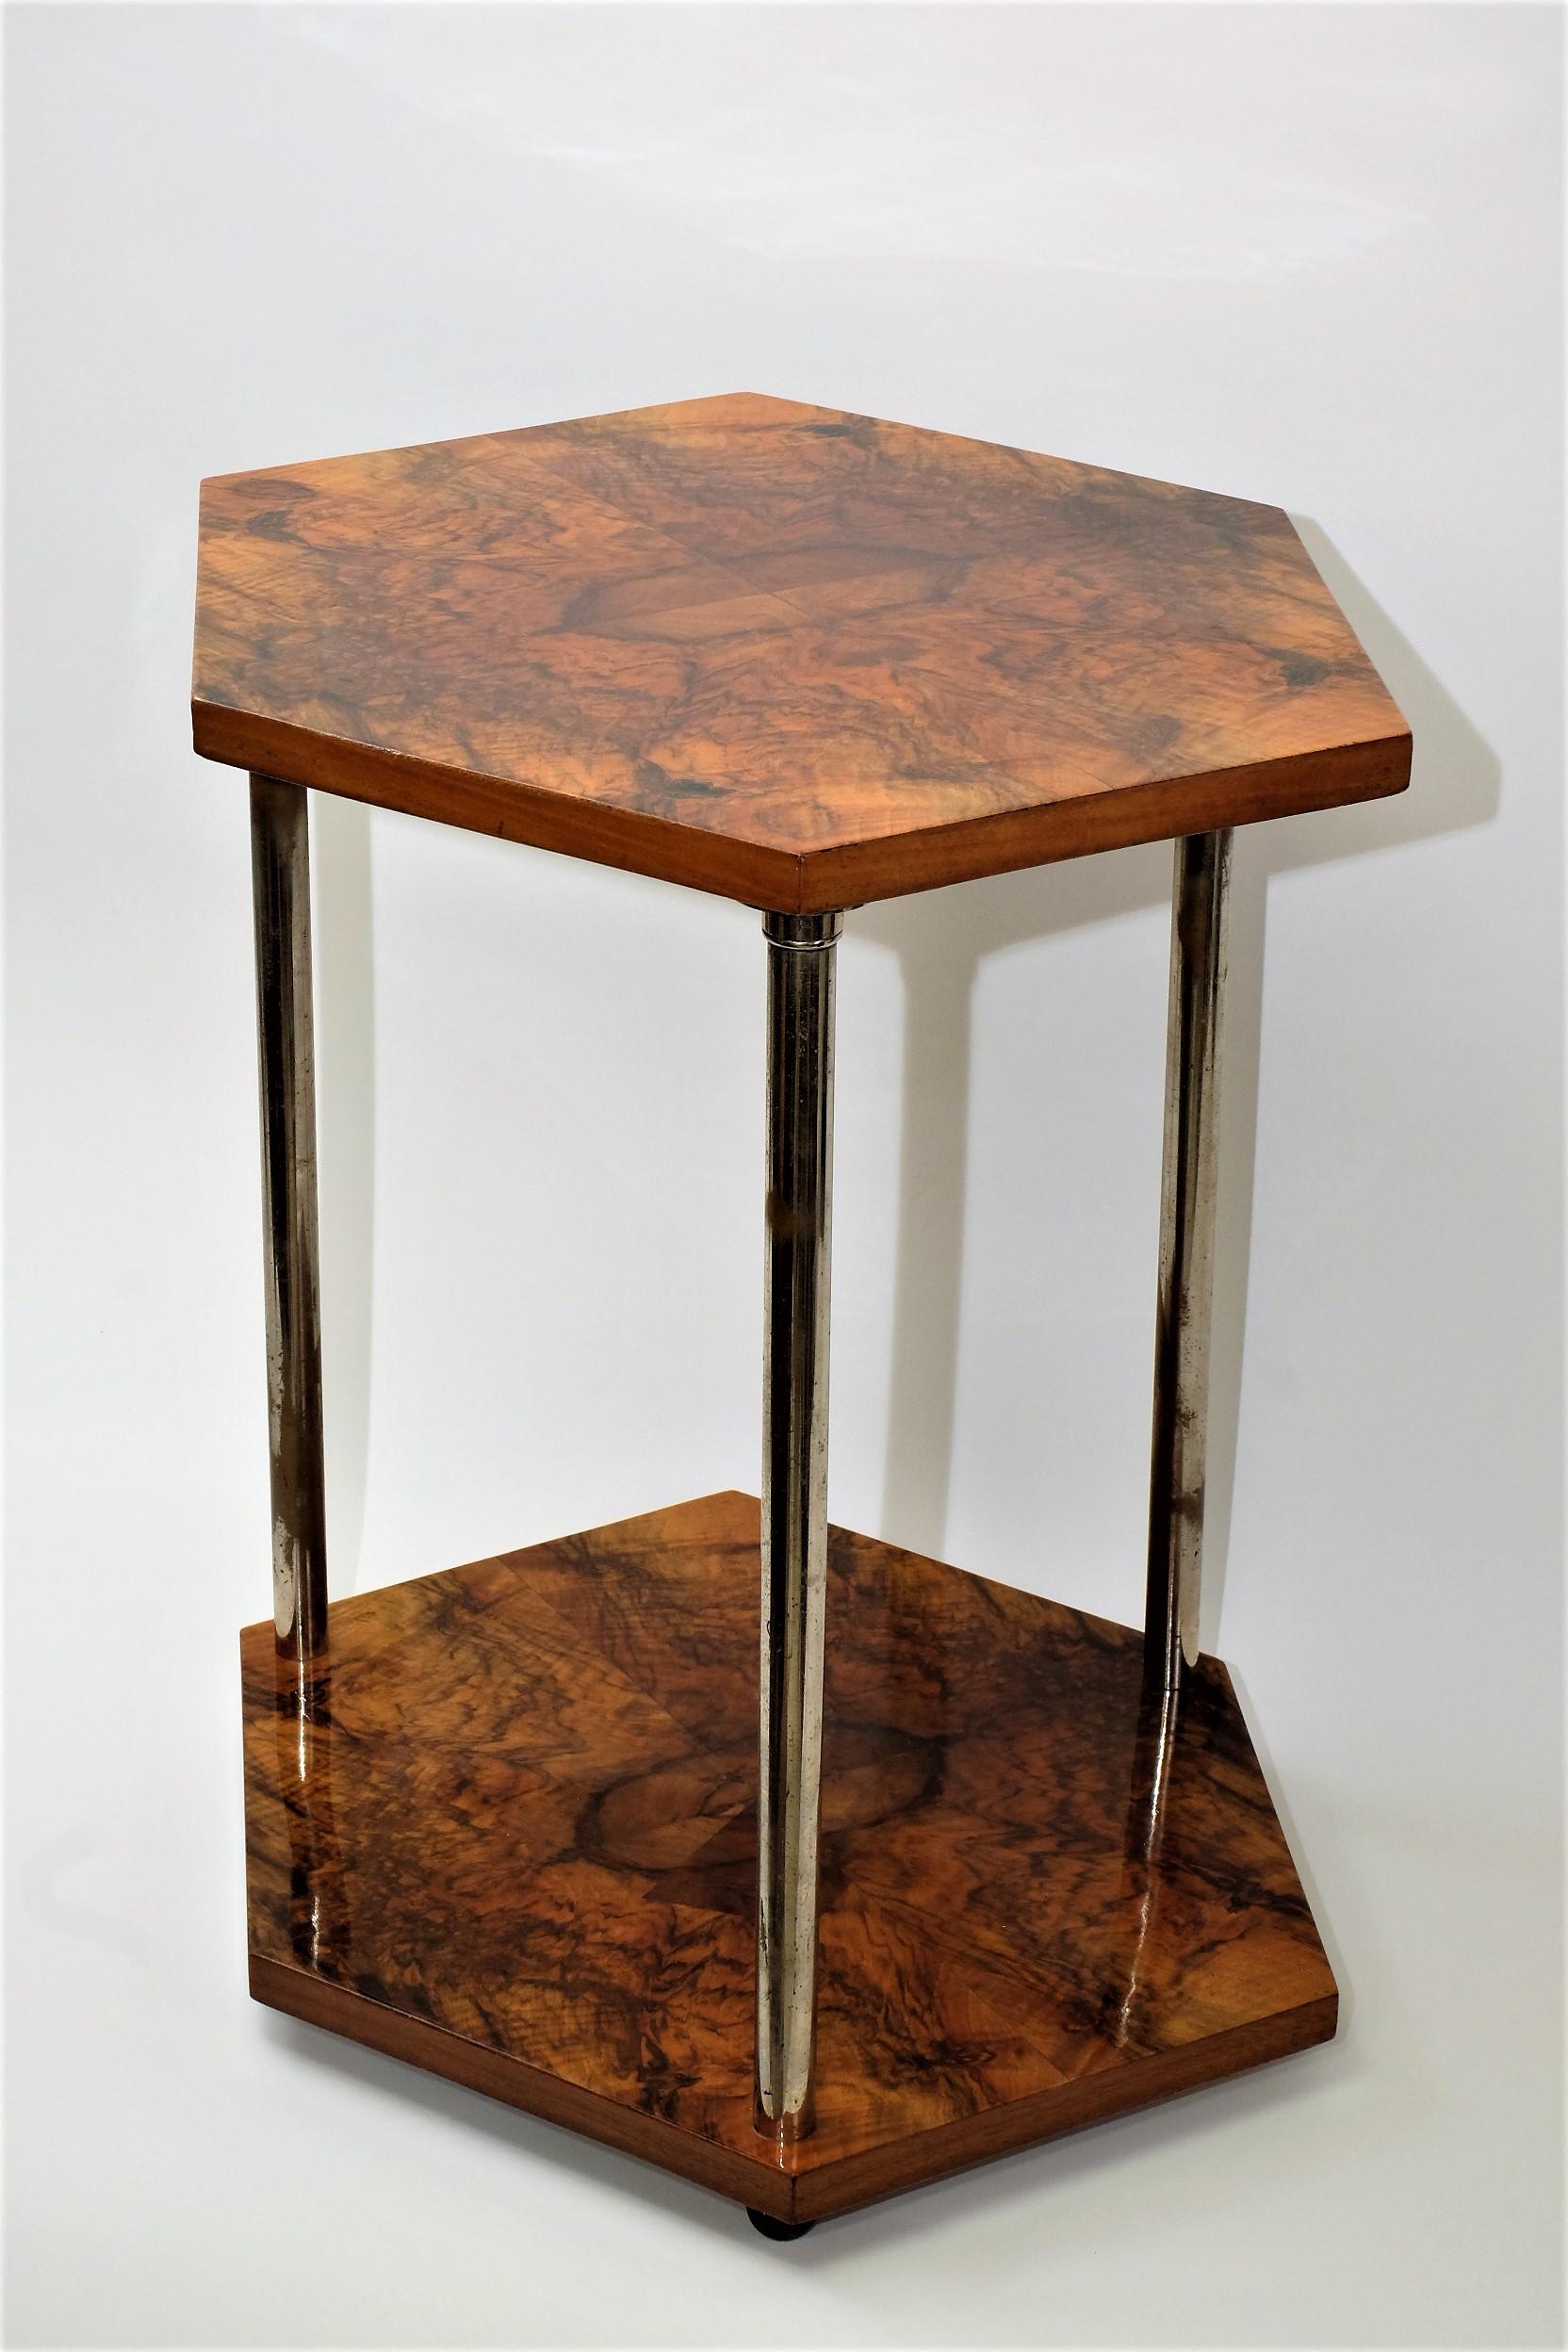 Art Deco Gueridon Side Table Chromed Legs Hexagonal Walnut In Good Condition For Sale In München, BY